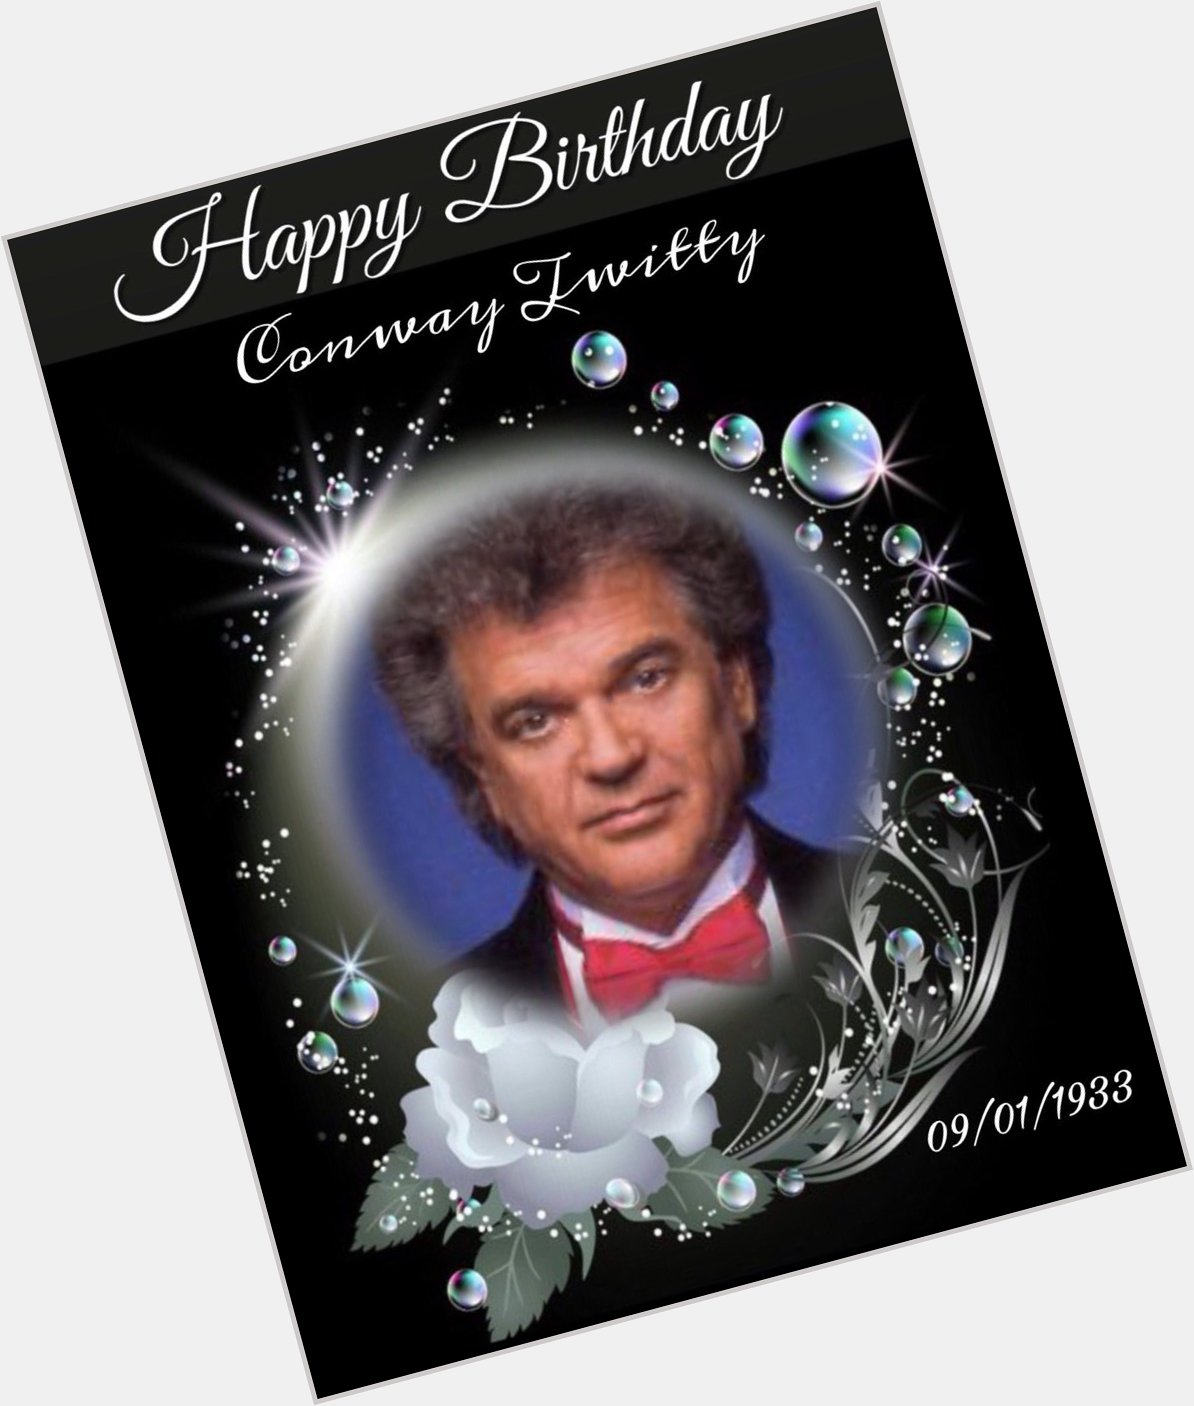 Happy Birthday     Conway Twitty 
September 1, 1933
(85) 